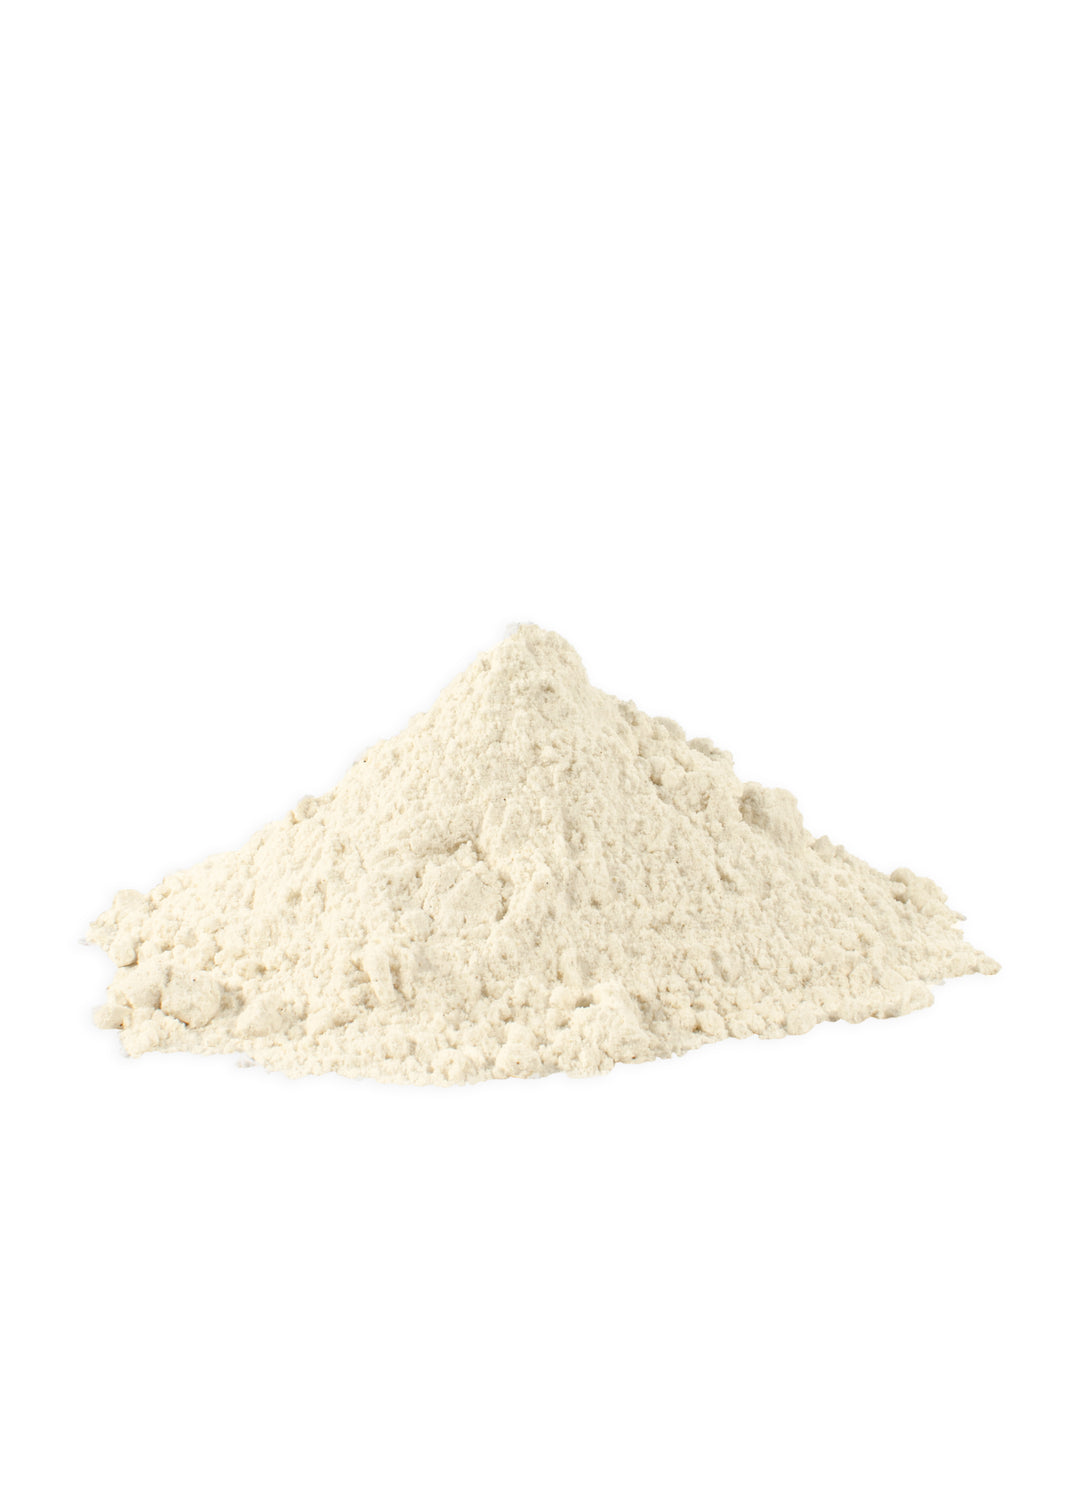 Bob's Red Mill Natural Foods Inc Spelt Flour-22 oz.-4/Case